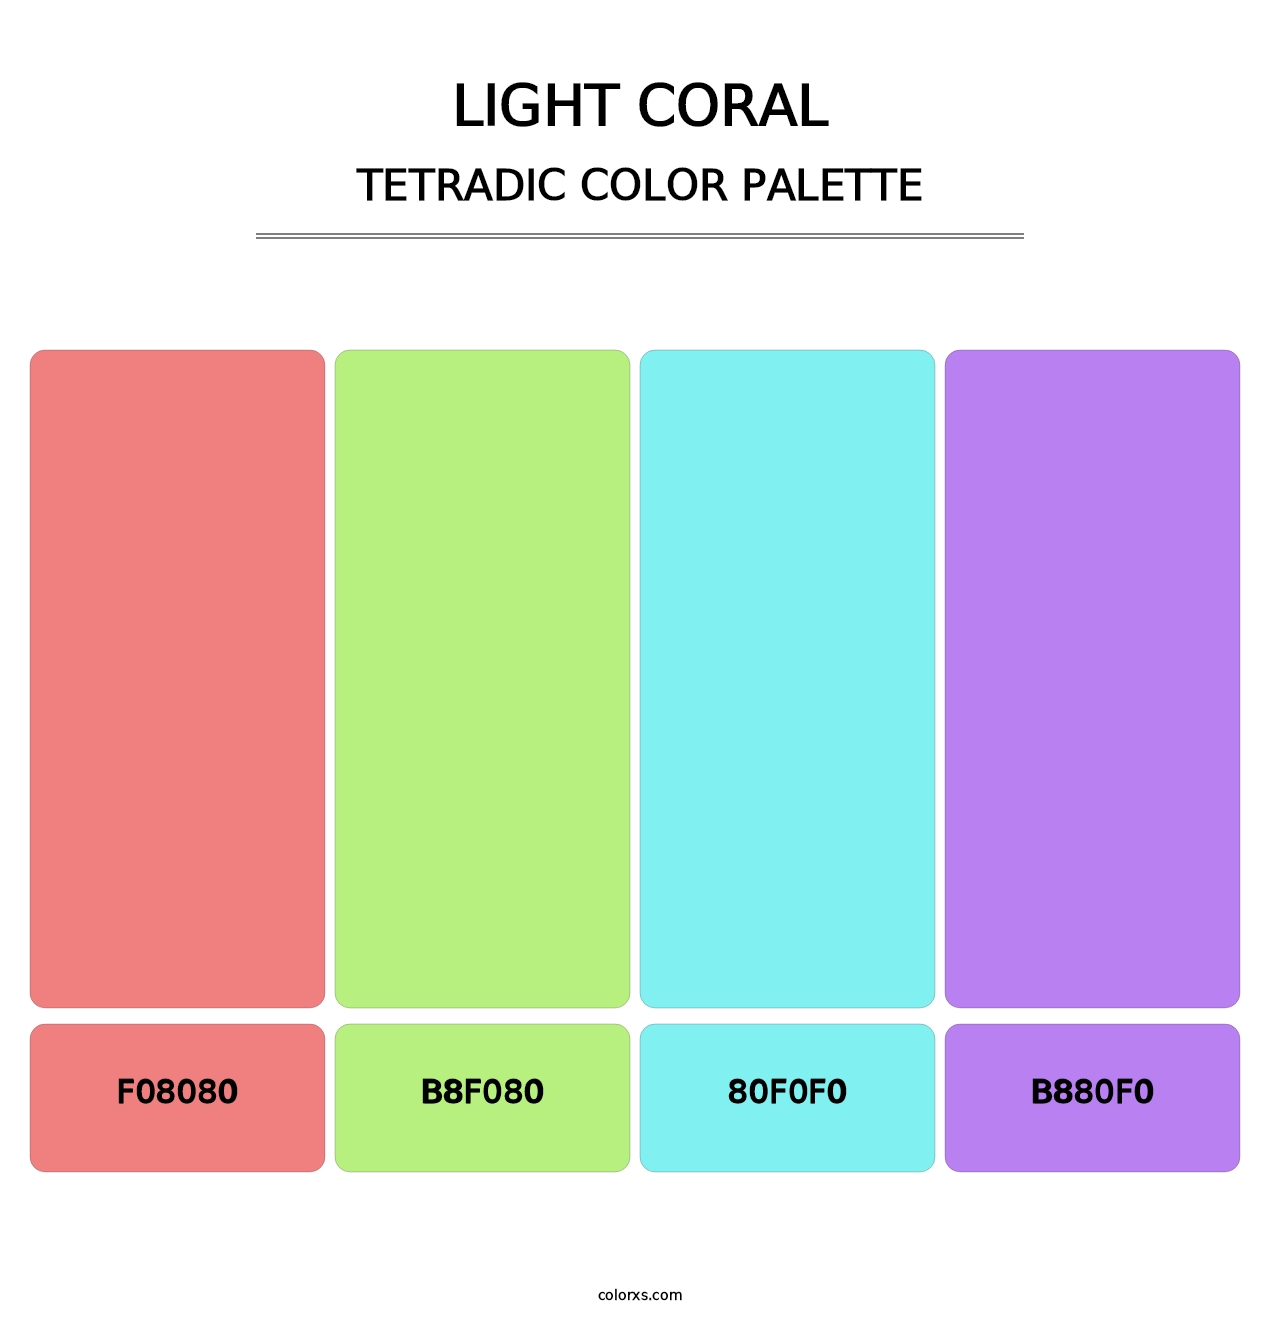 Light Coral - Tetradic Color Palette